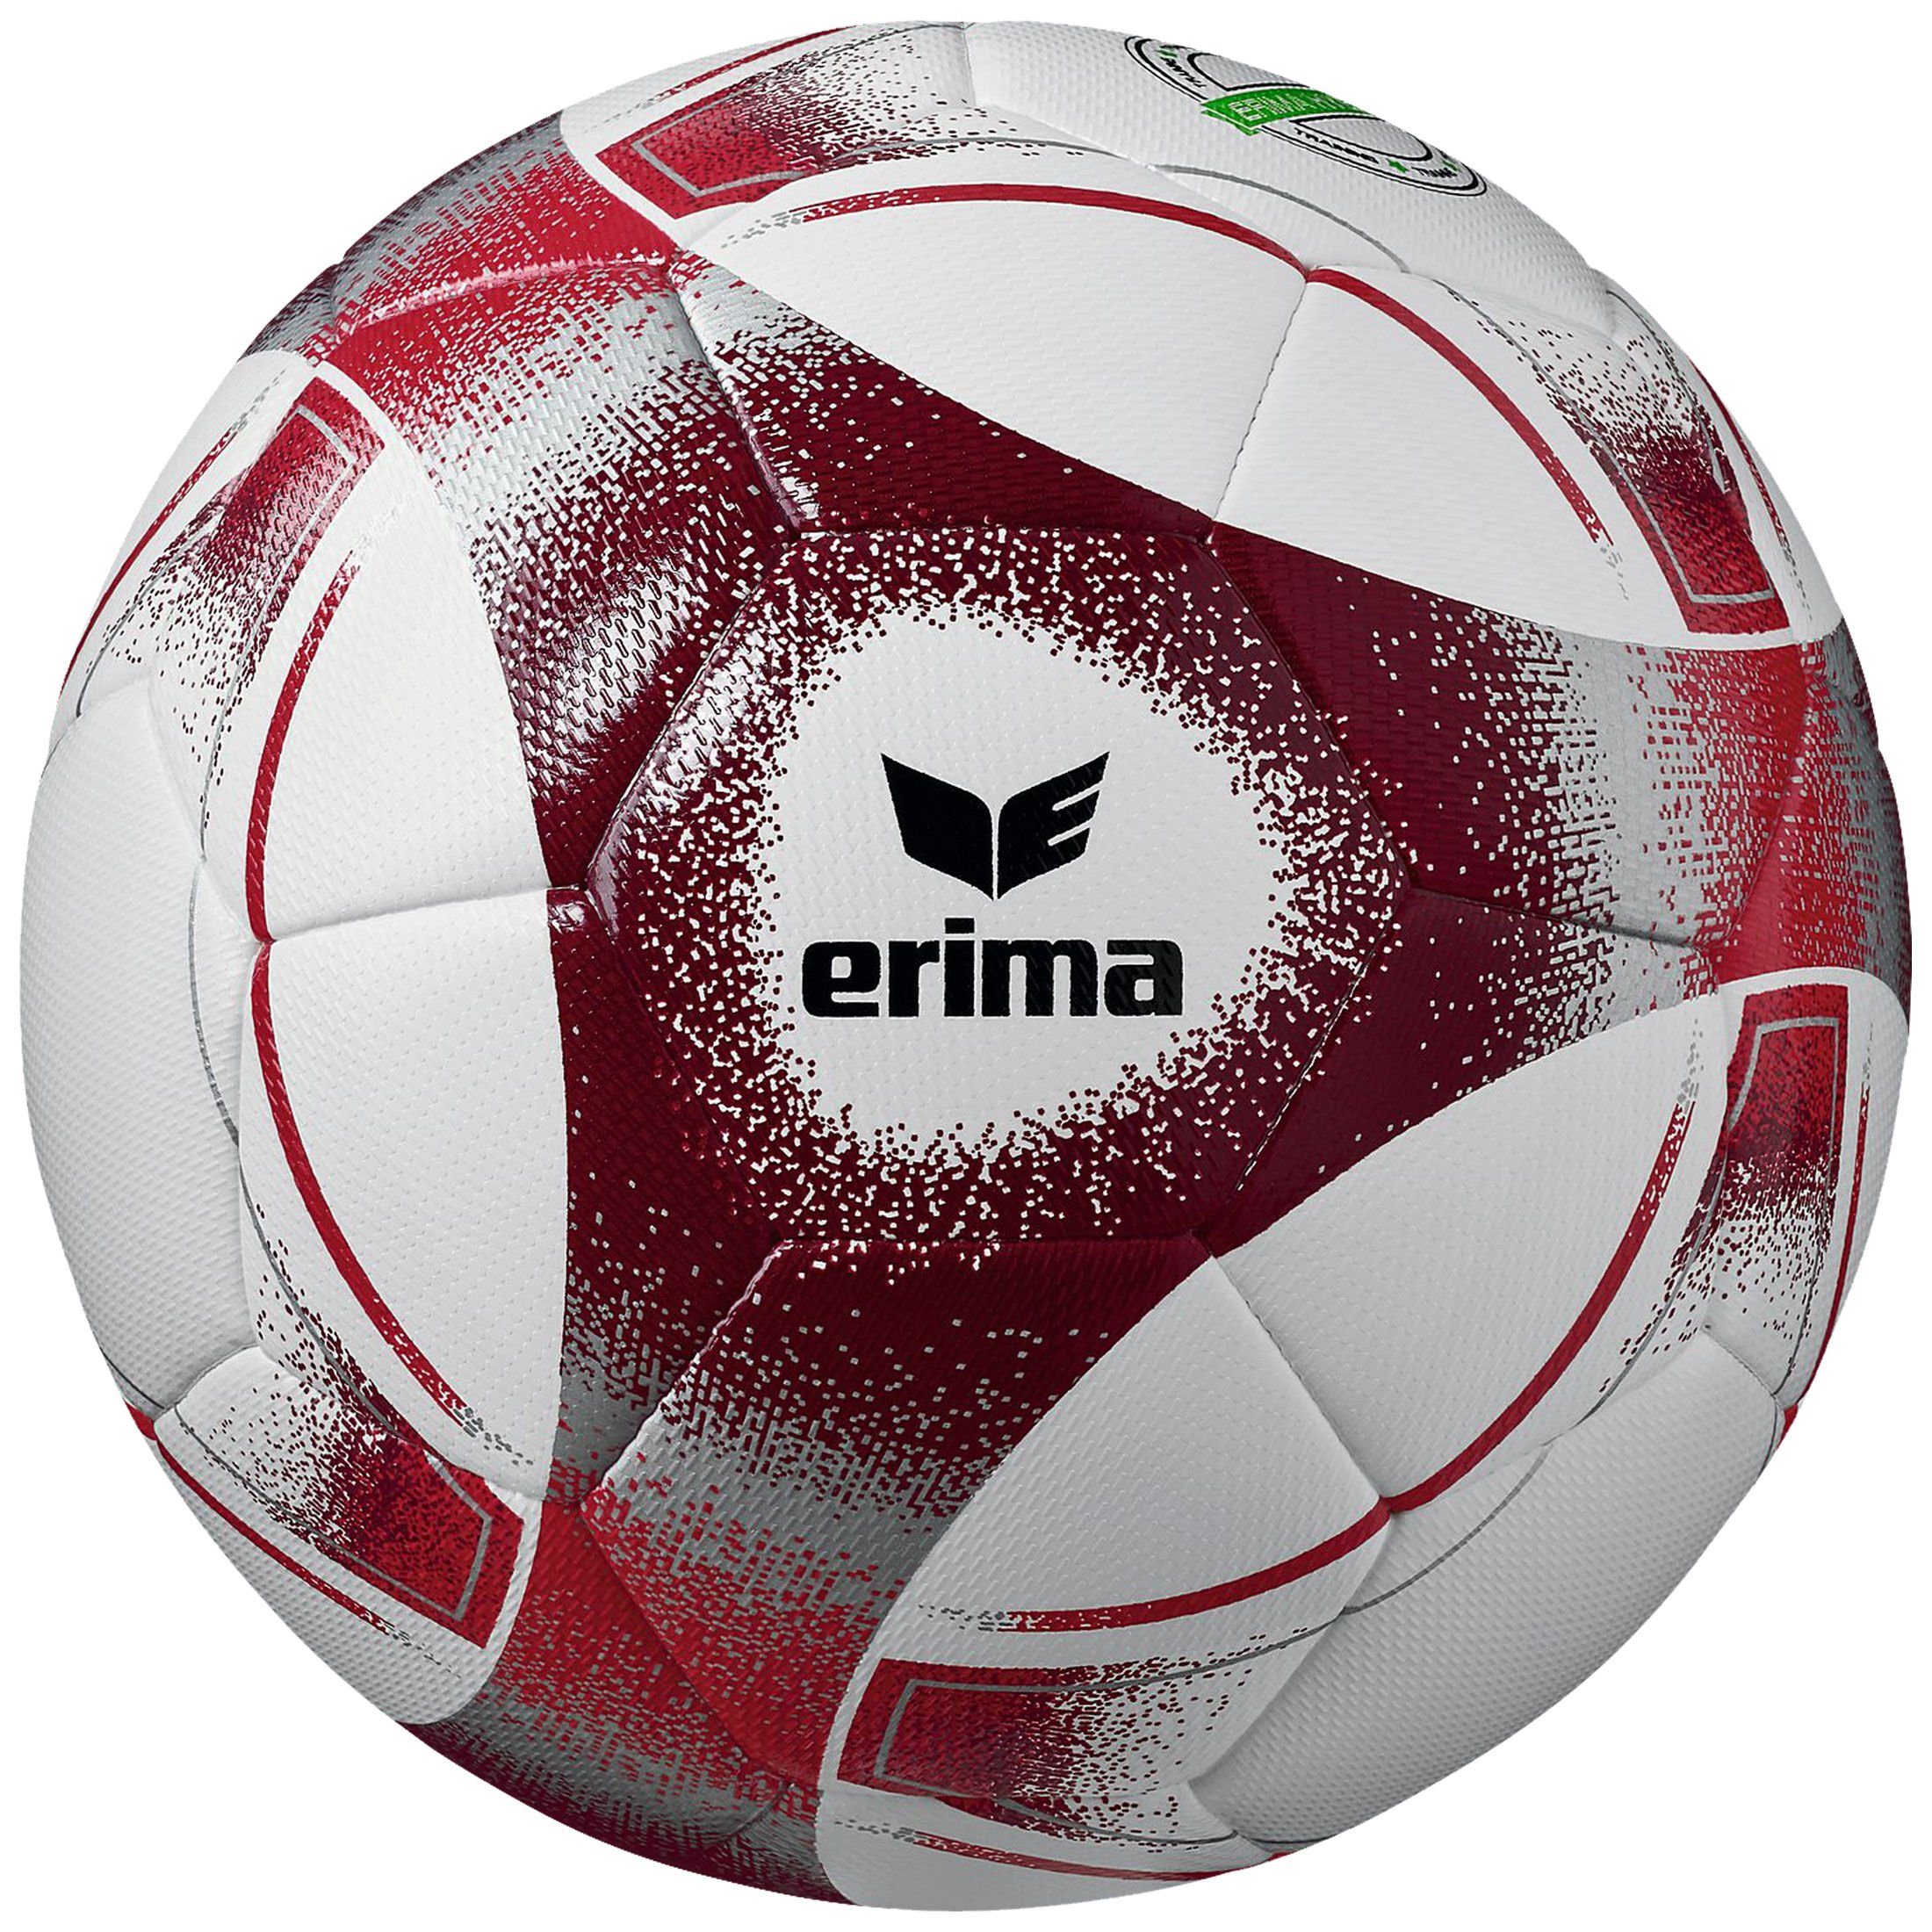 Hybrid Training Fußball Erima / Fußball rot bordeaux